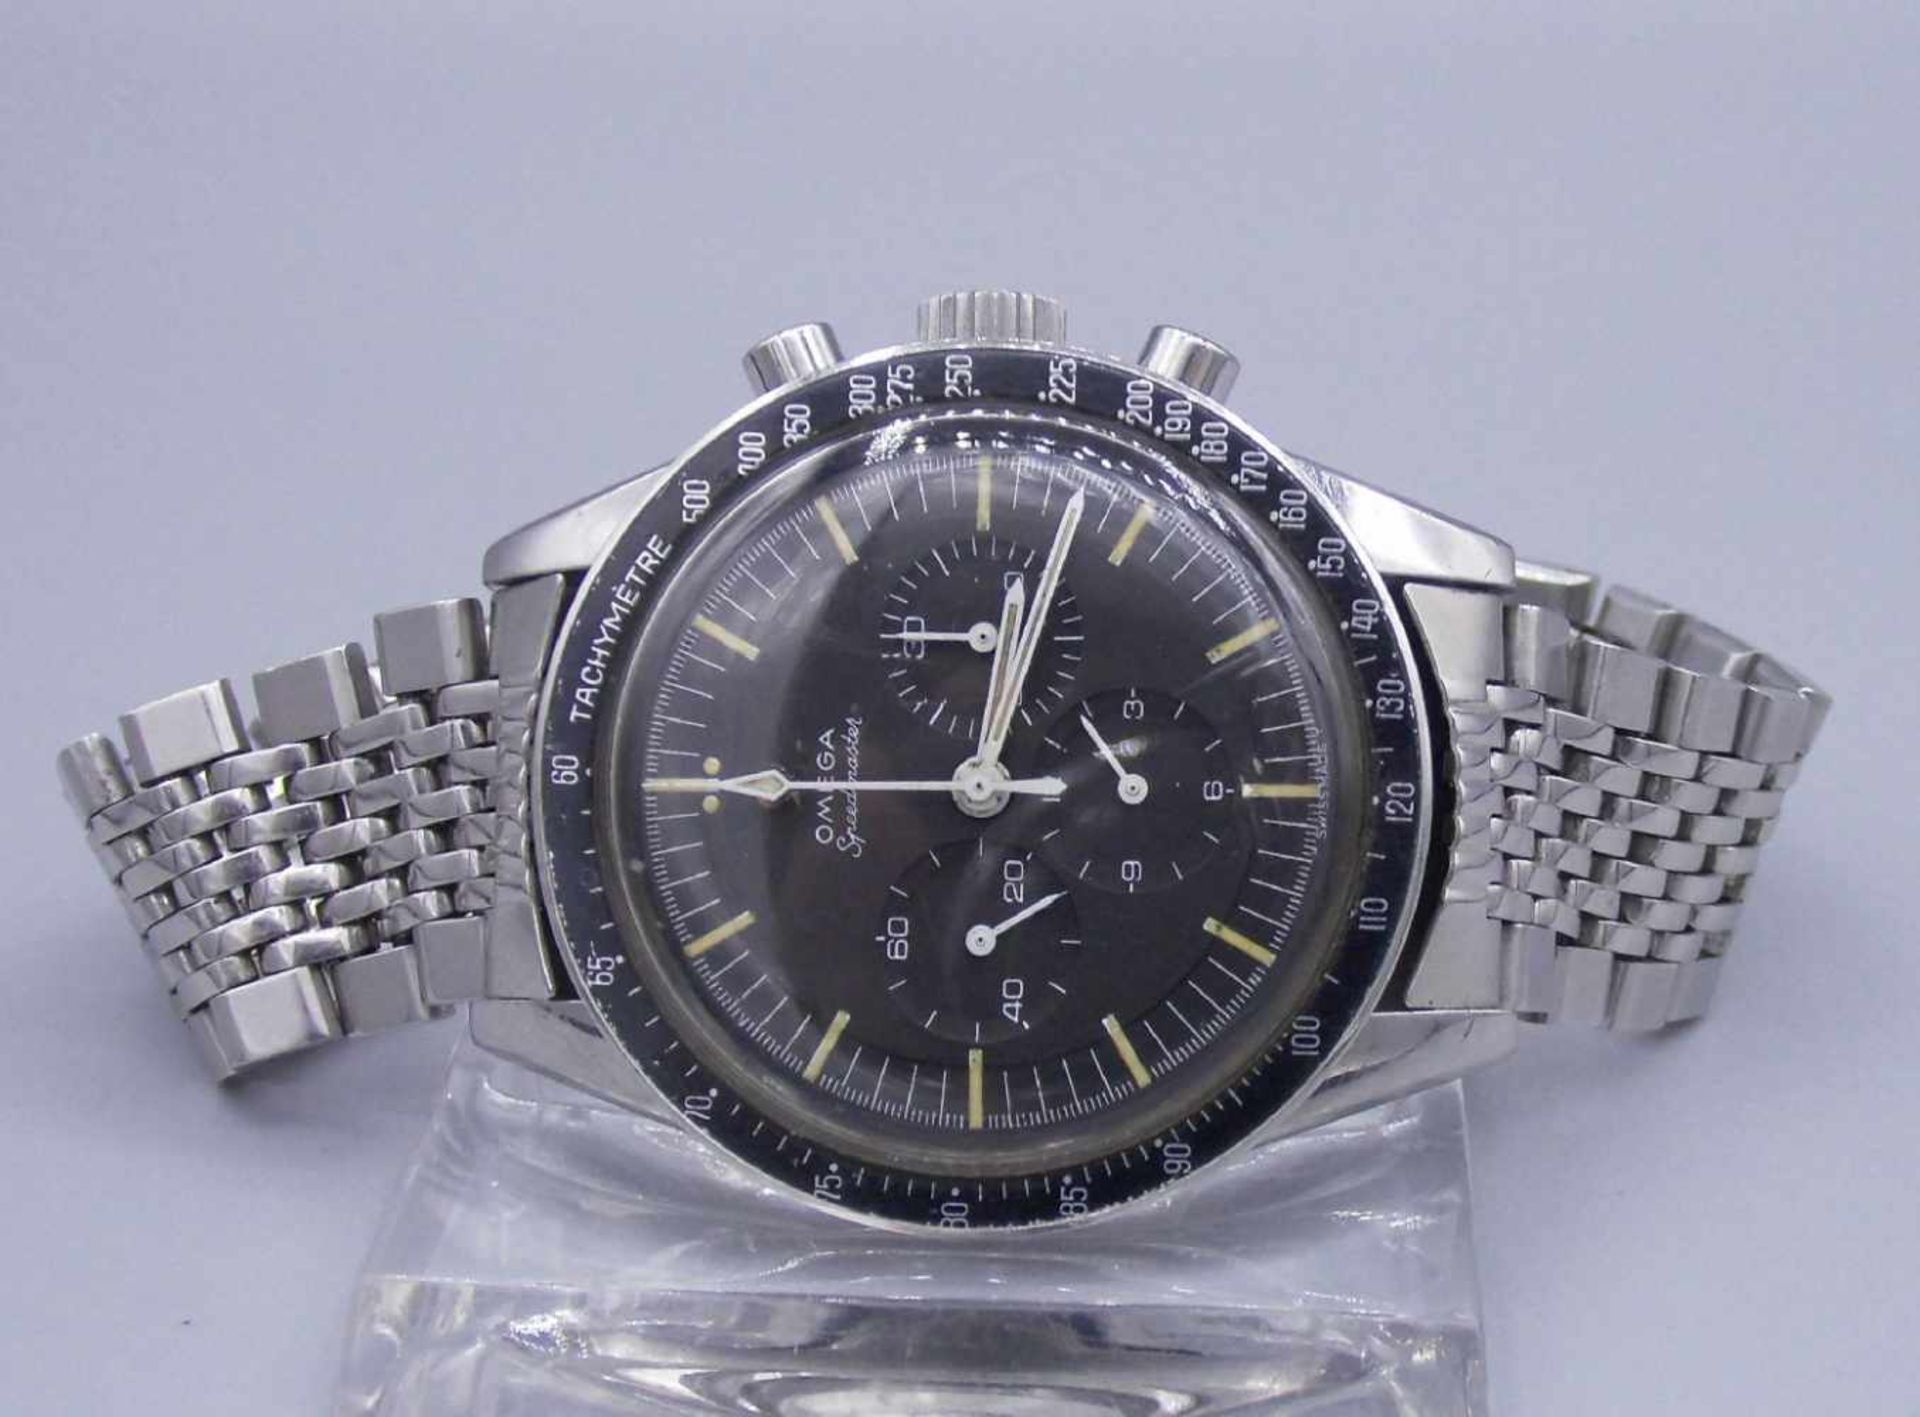 VINTAGE ARMBANDUHR / CHRONOGRAPH - Omega Speedmaster / wristwatch, Handaufzug, 1960er Jahre ( - Image 2 of 13